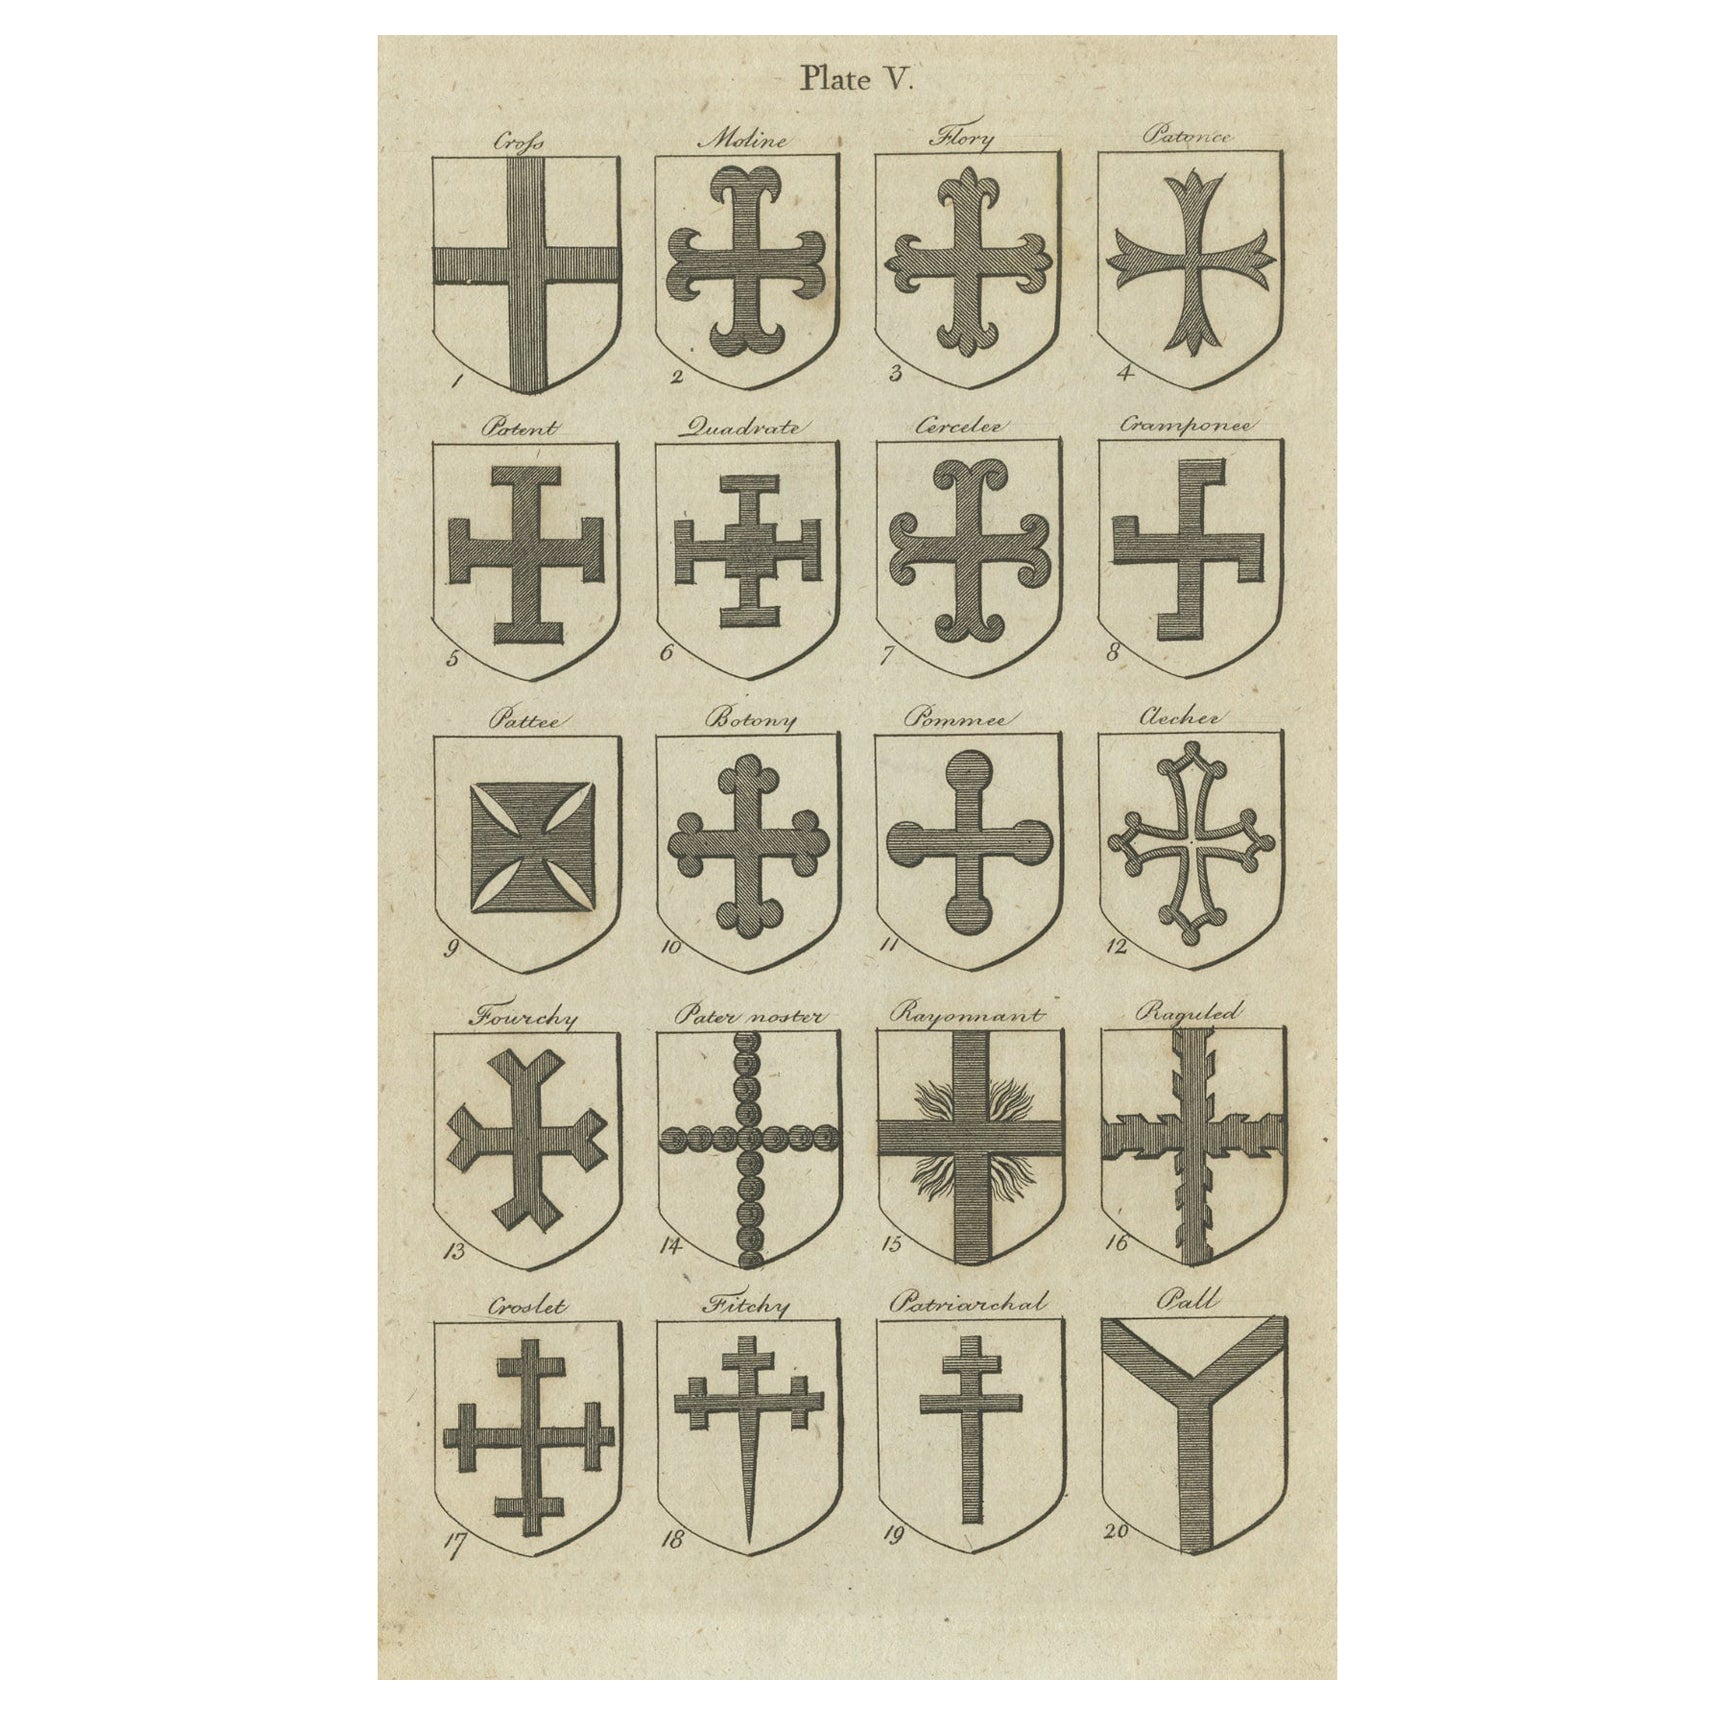 Antique Print of Heraldry Crosses in England, c.1820